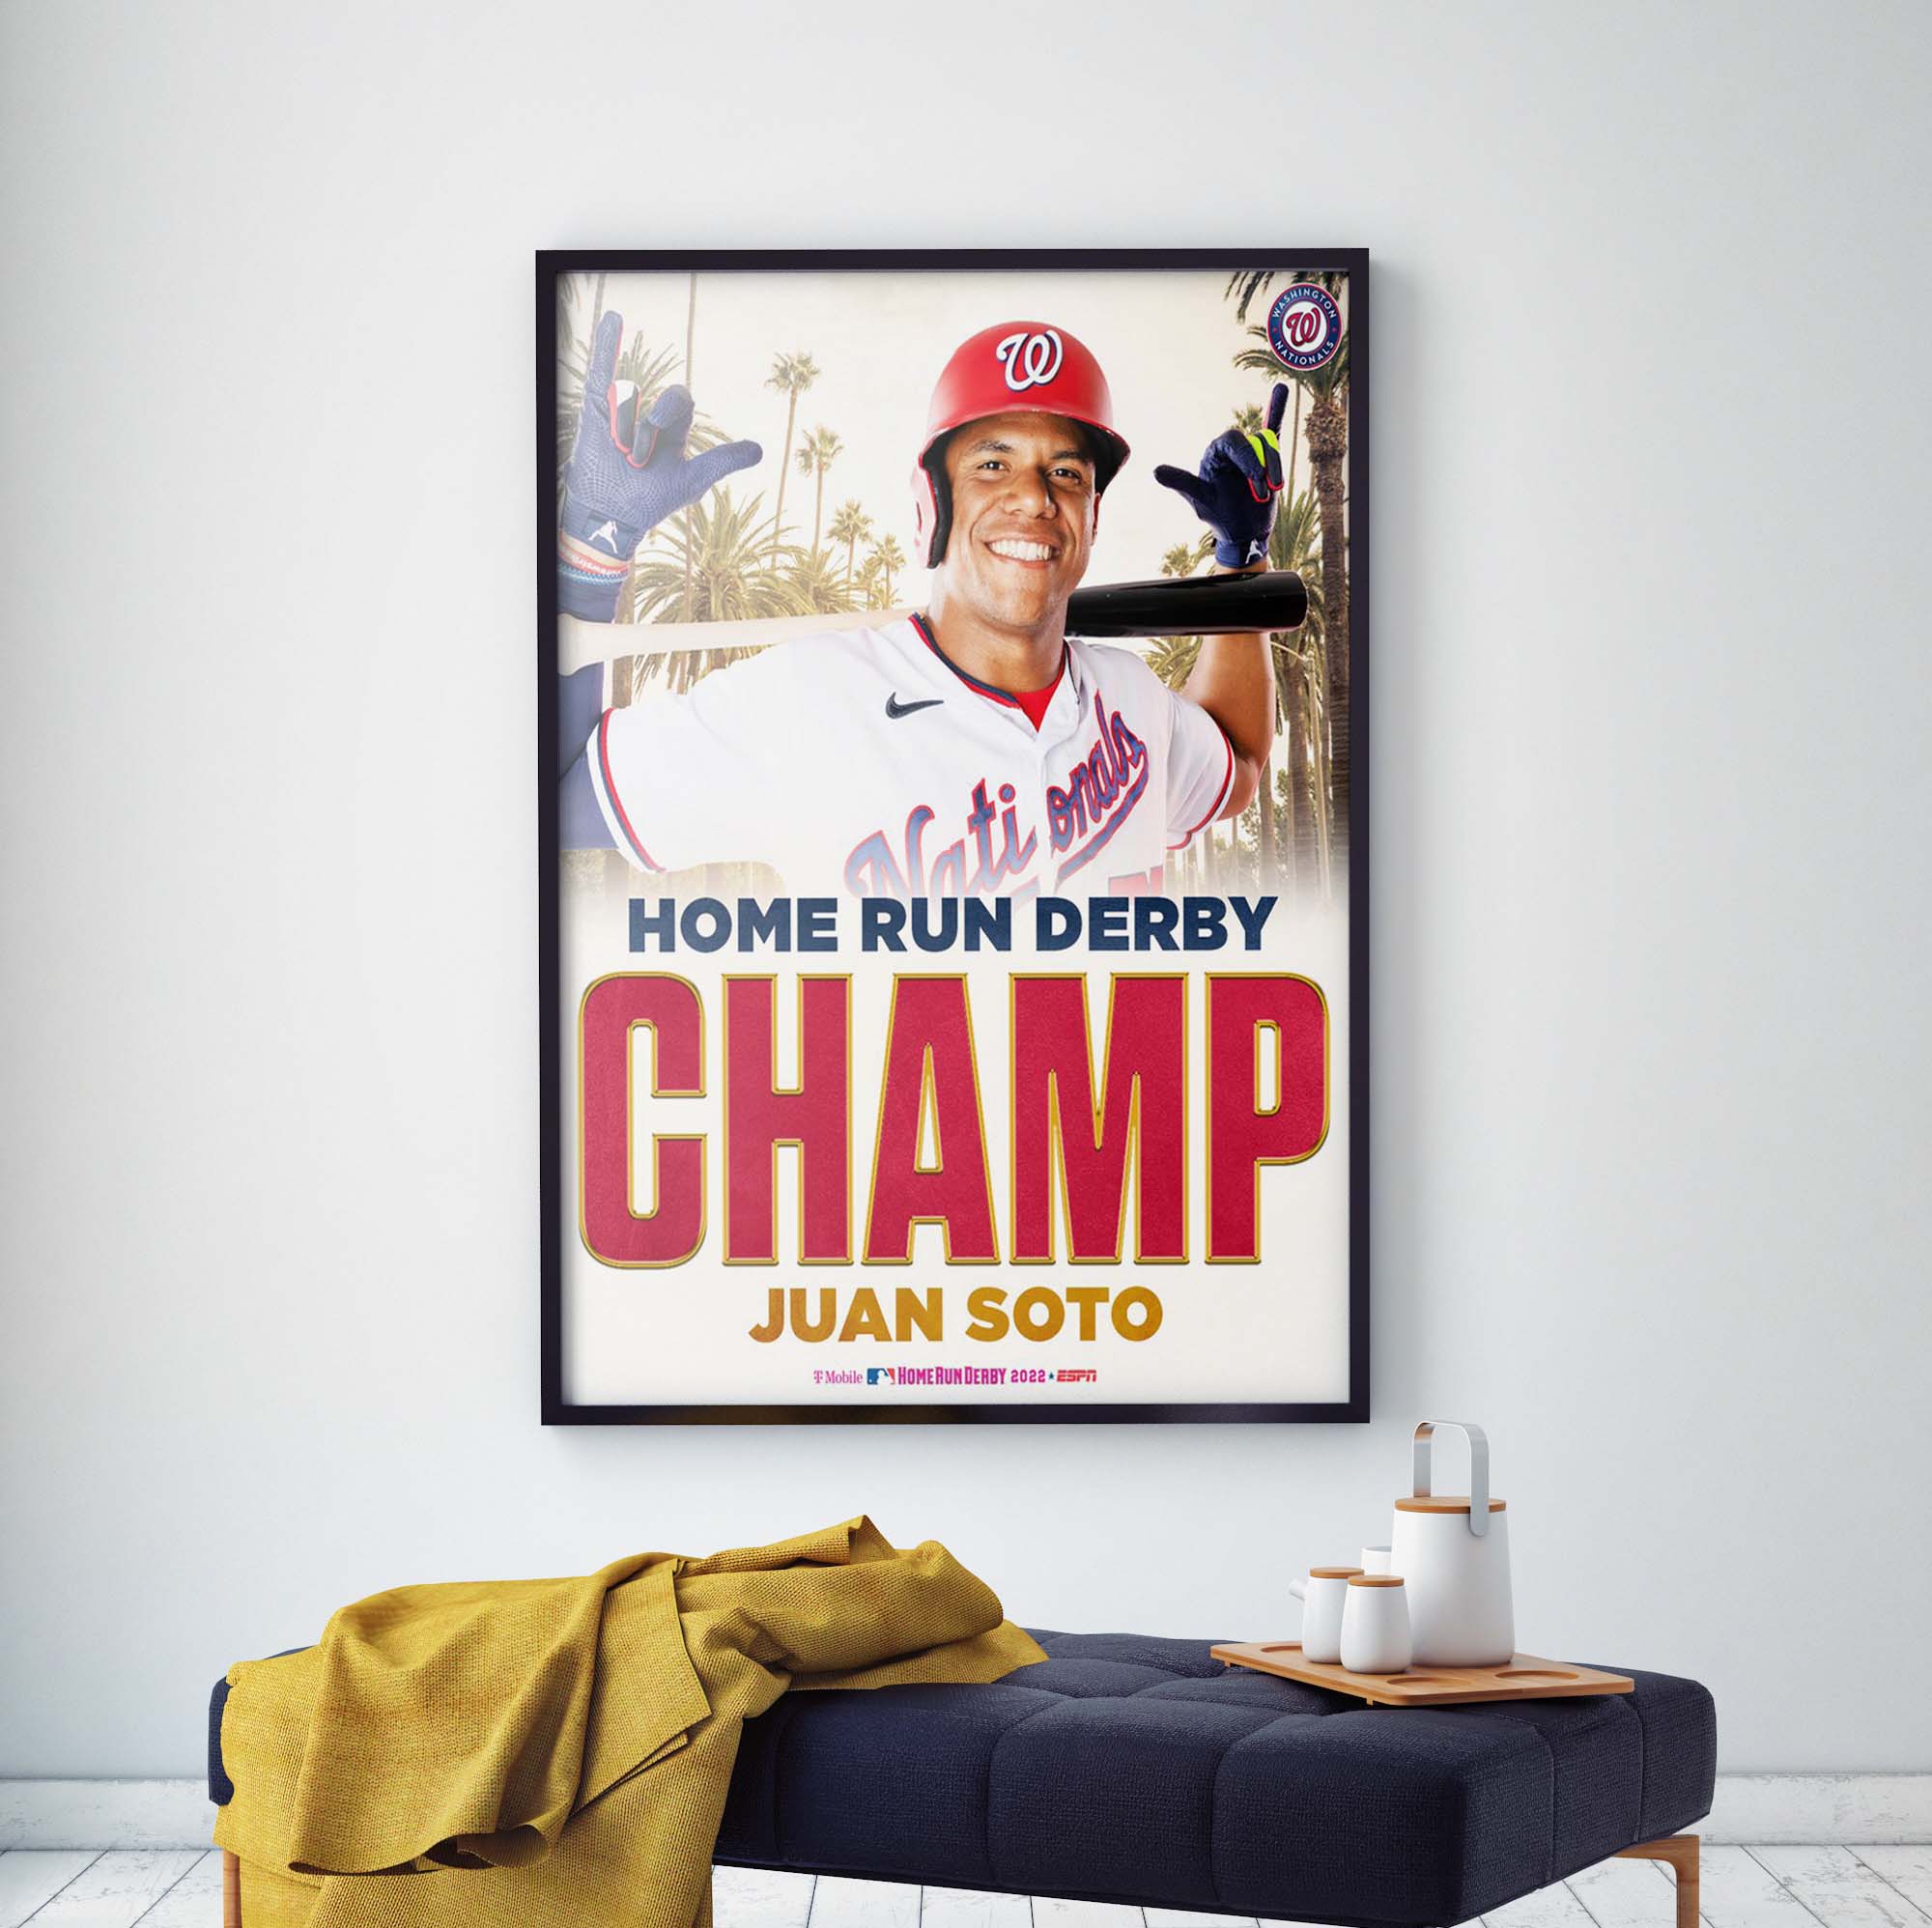 Juan Soto Home Run 2022 HR Derby Champ Poster, Custom prints store